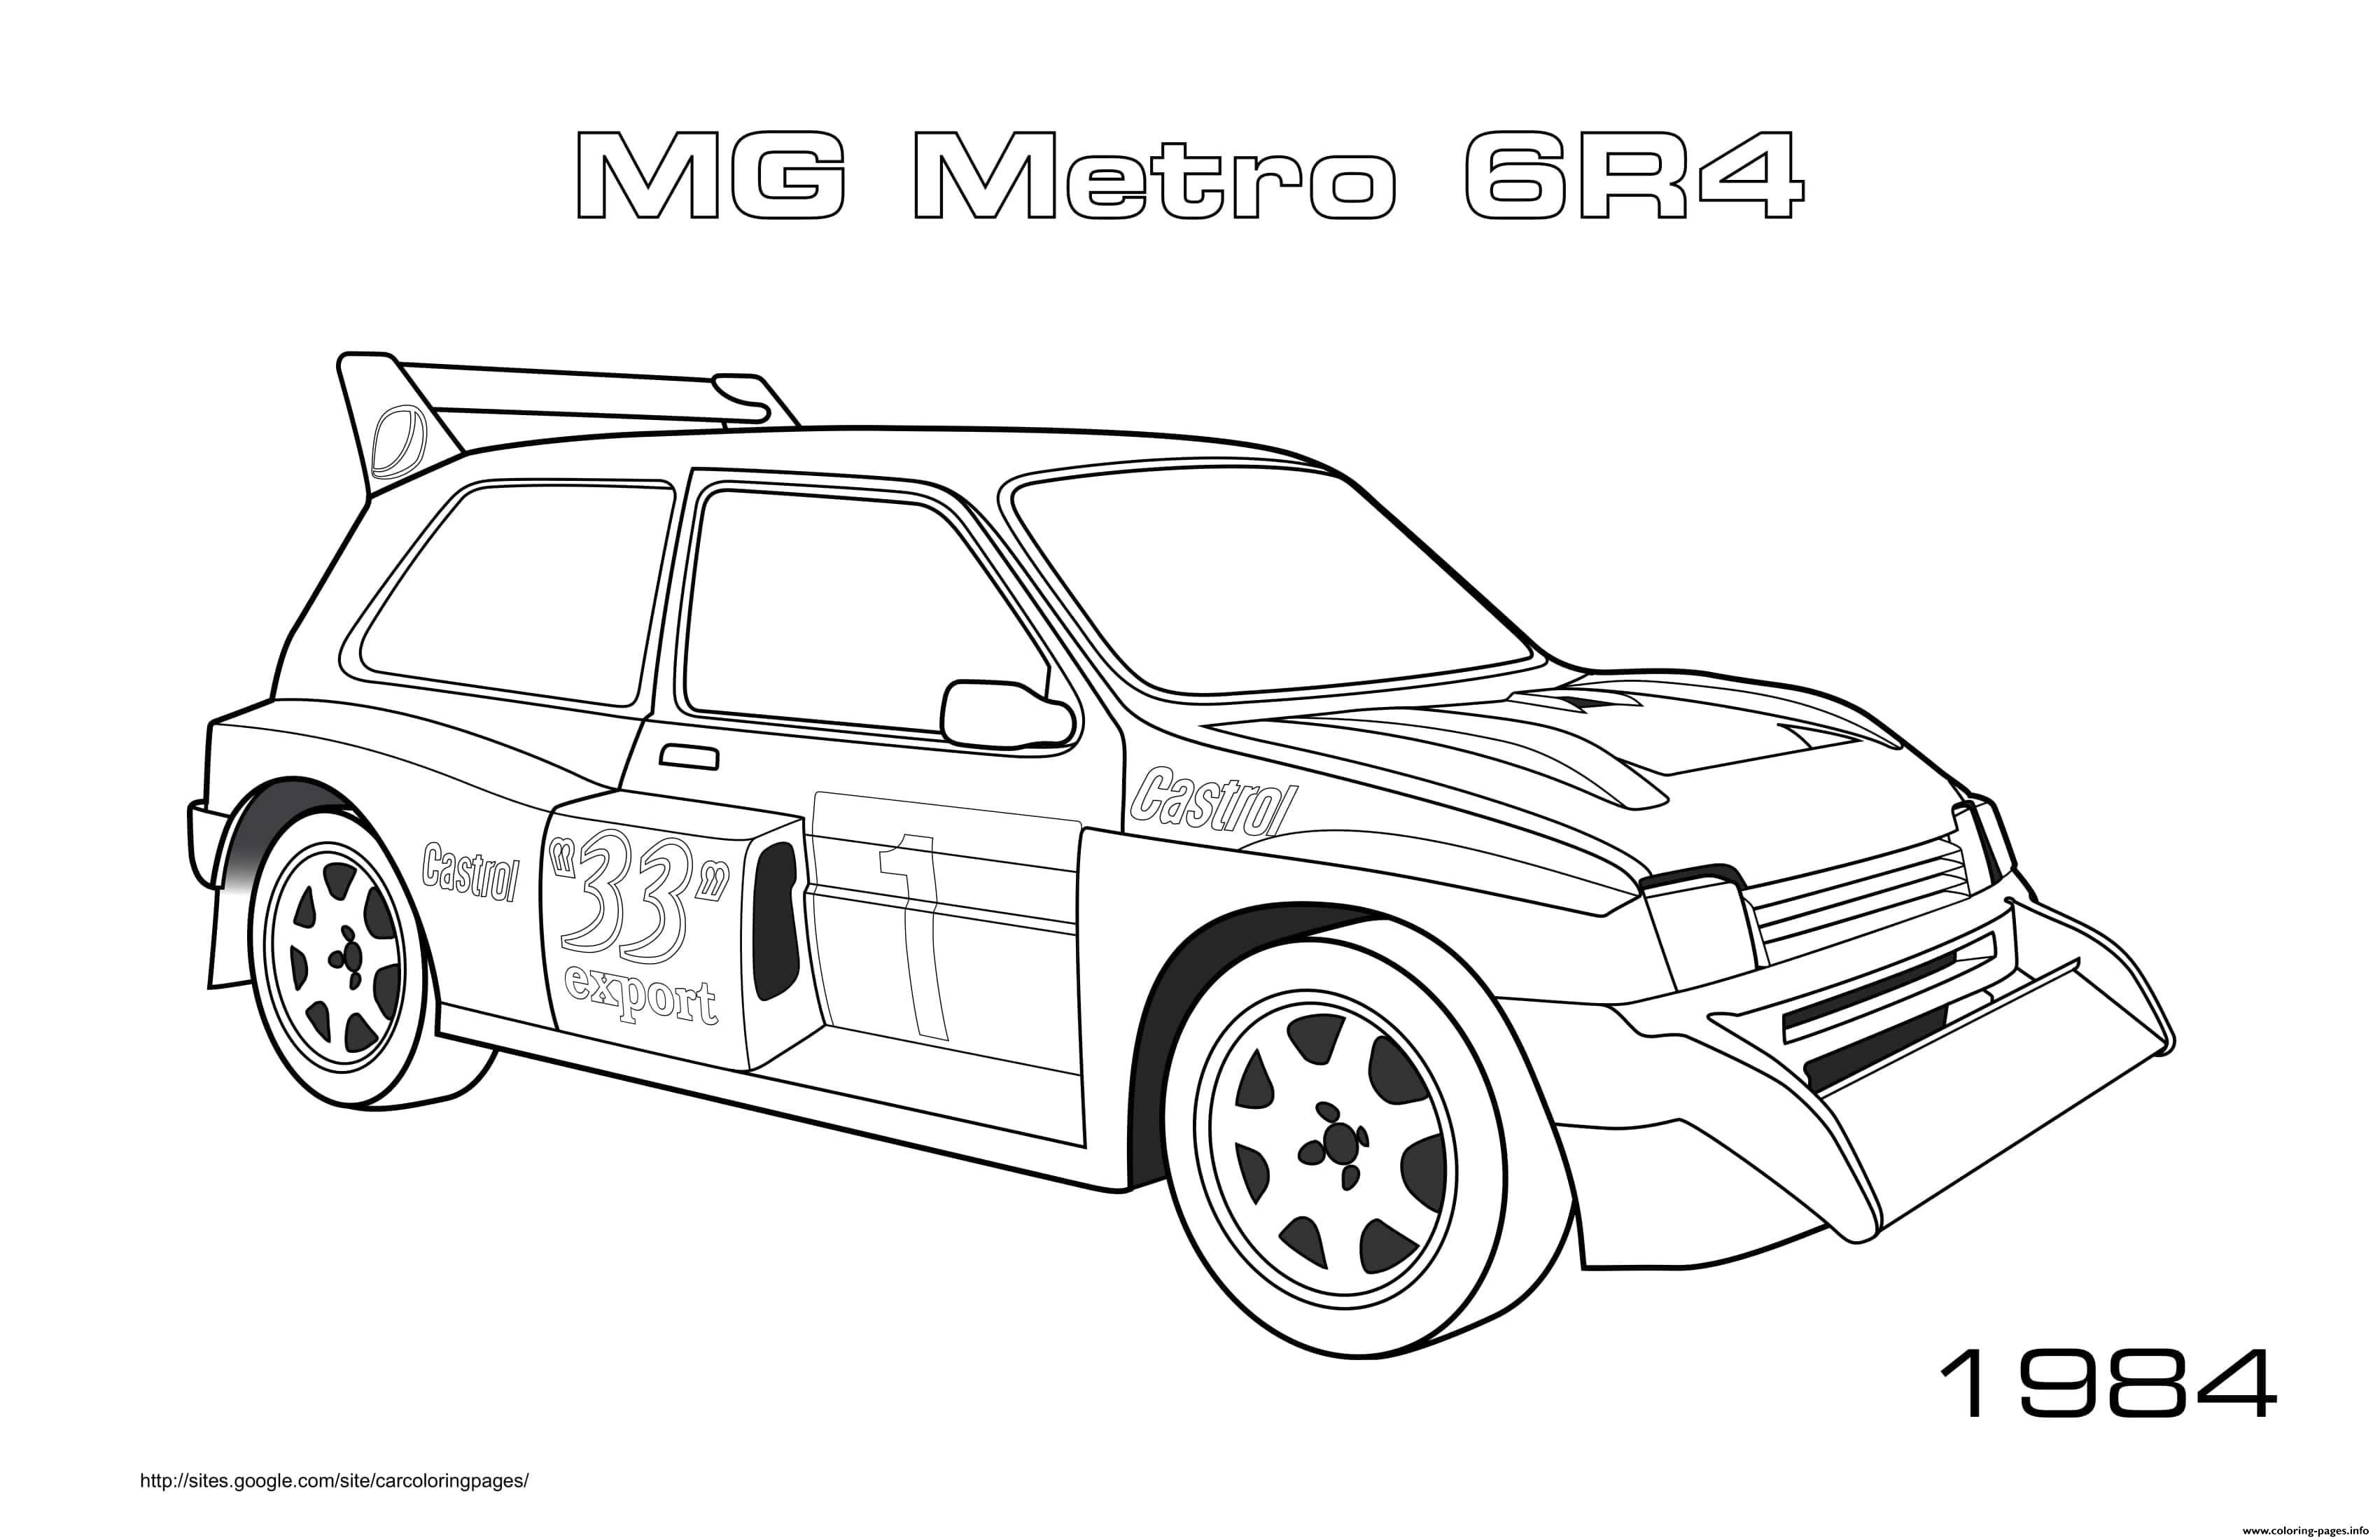 Mg Metro 6r4 1984 coloring